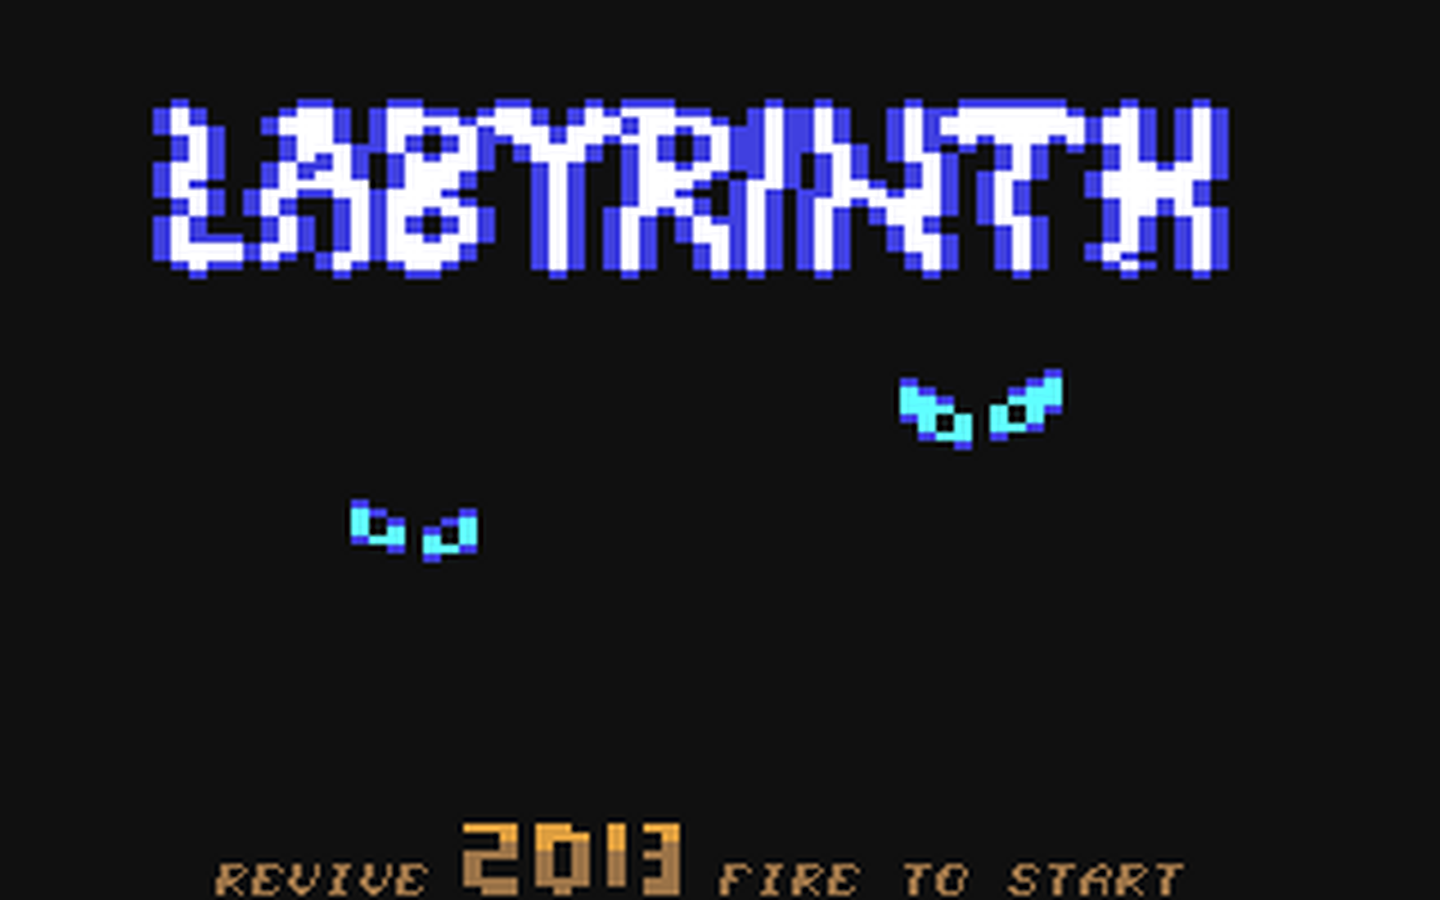 C64 GameBase Labyrinth (Public_Domain) 2013